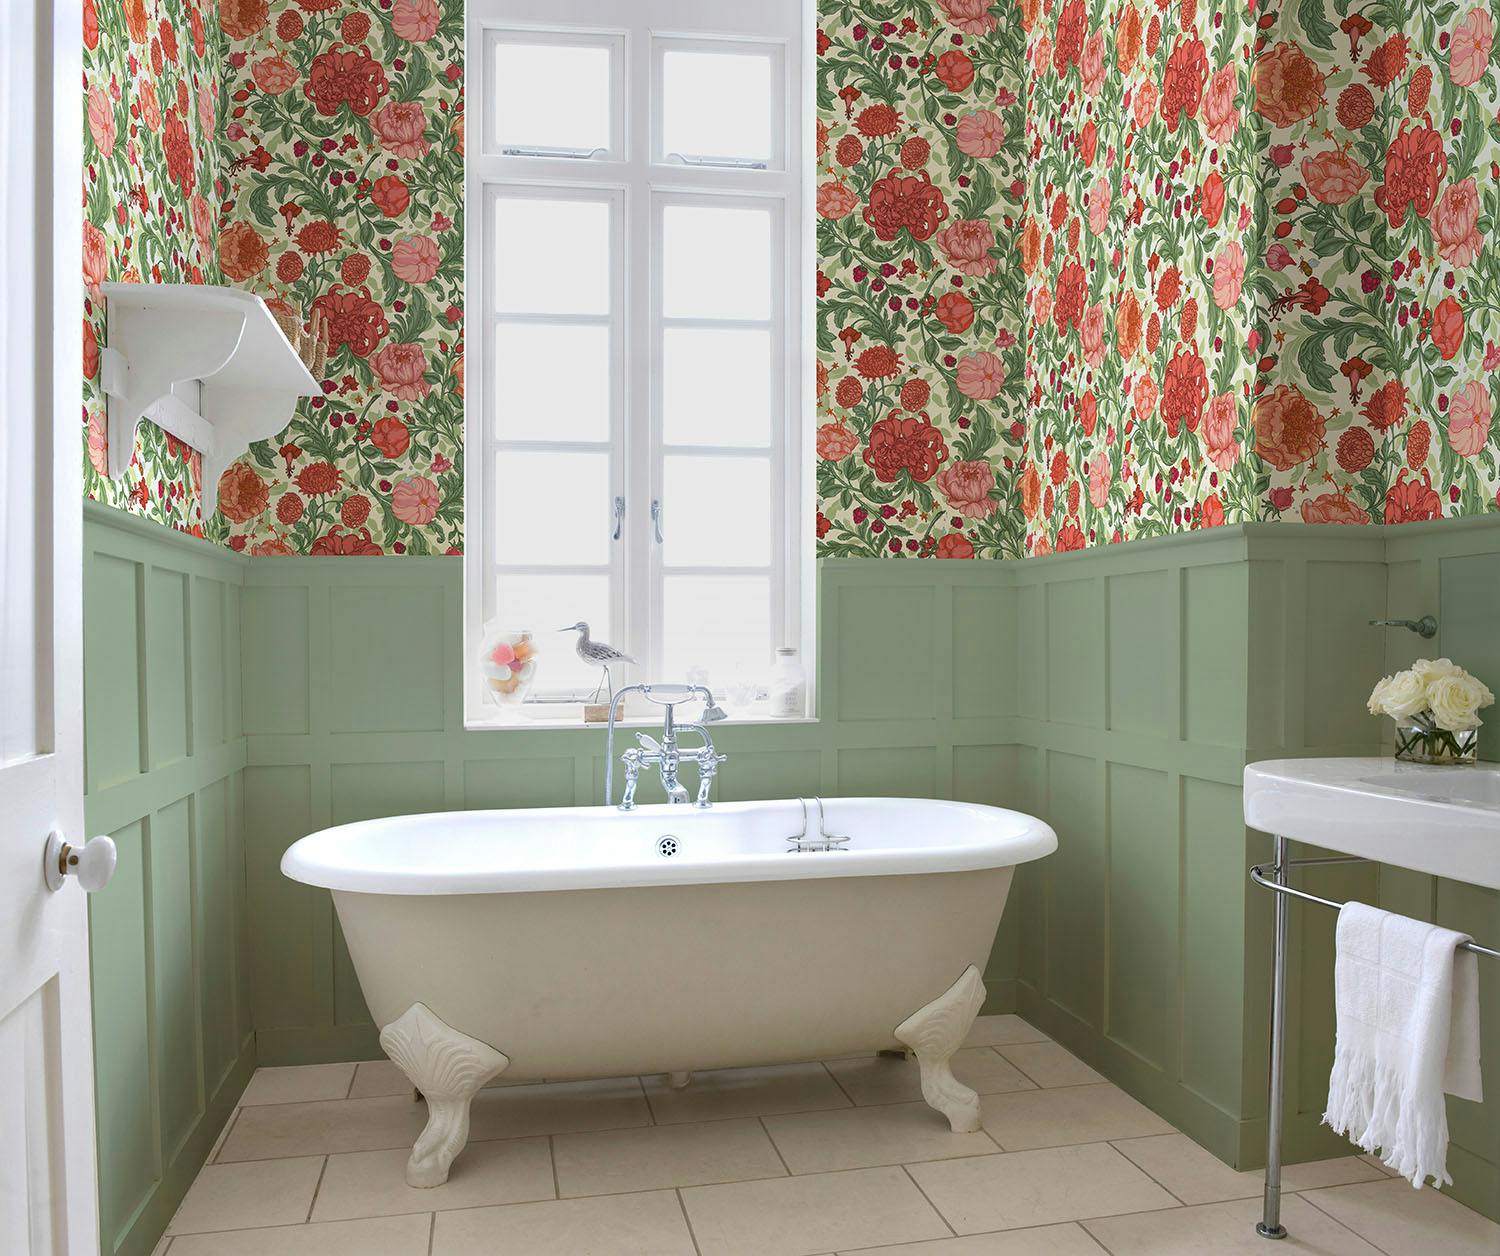 l'envolée lyrique set into a bathroom in a soft shade of almond green